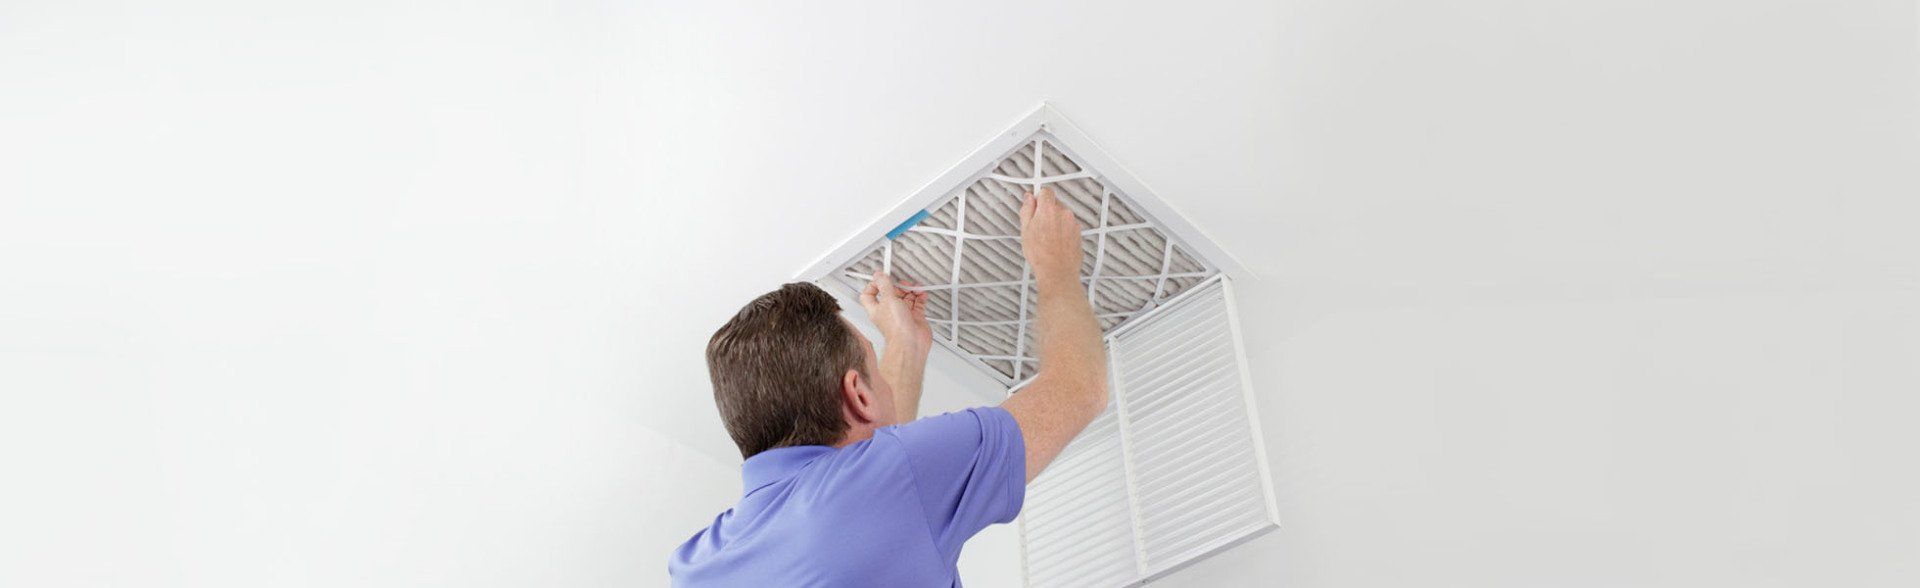 A man fixing an air ventilation